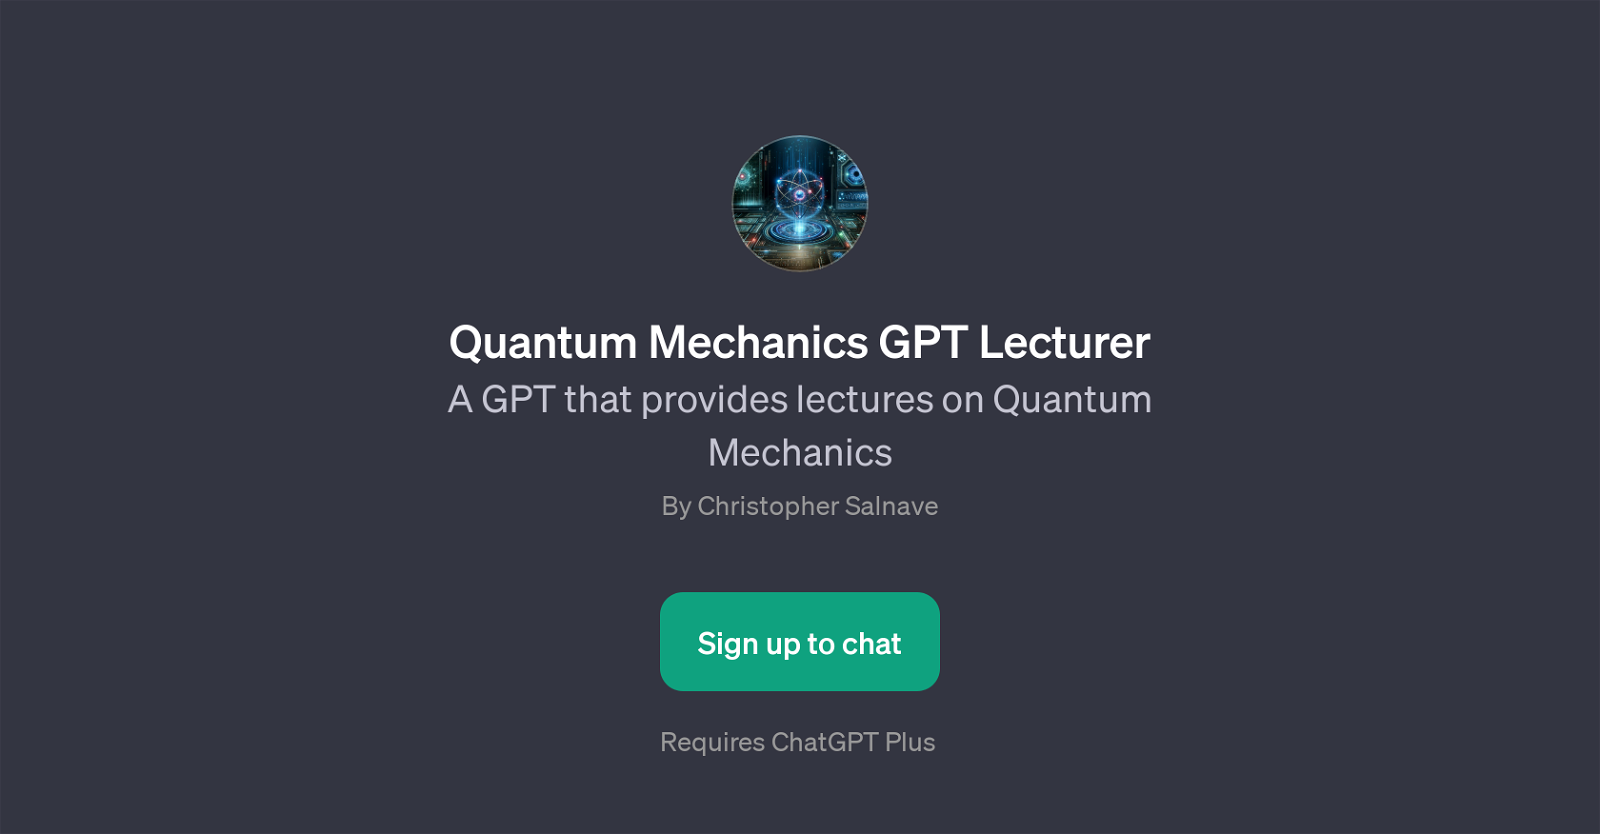 Quantum Mechanics GPT Lecturer website